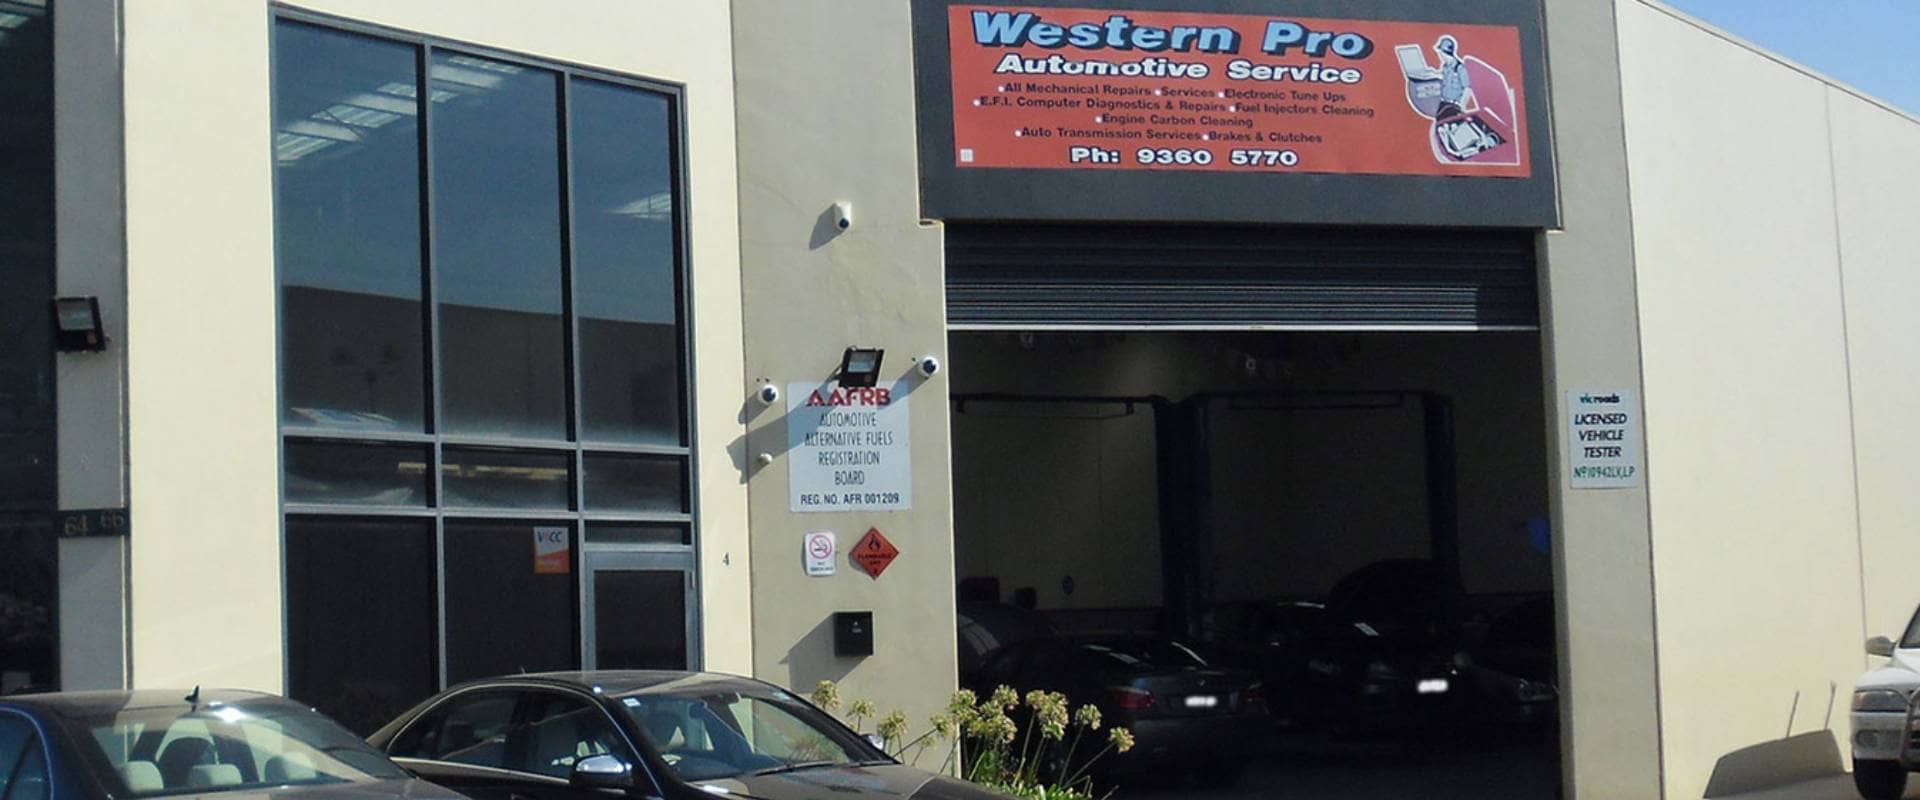 Western Pro Automotive Service